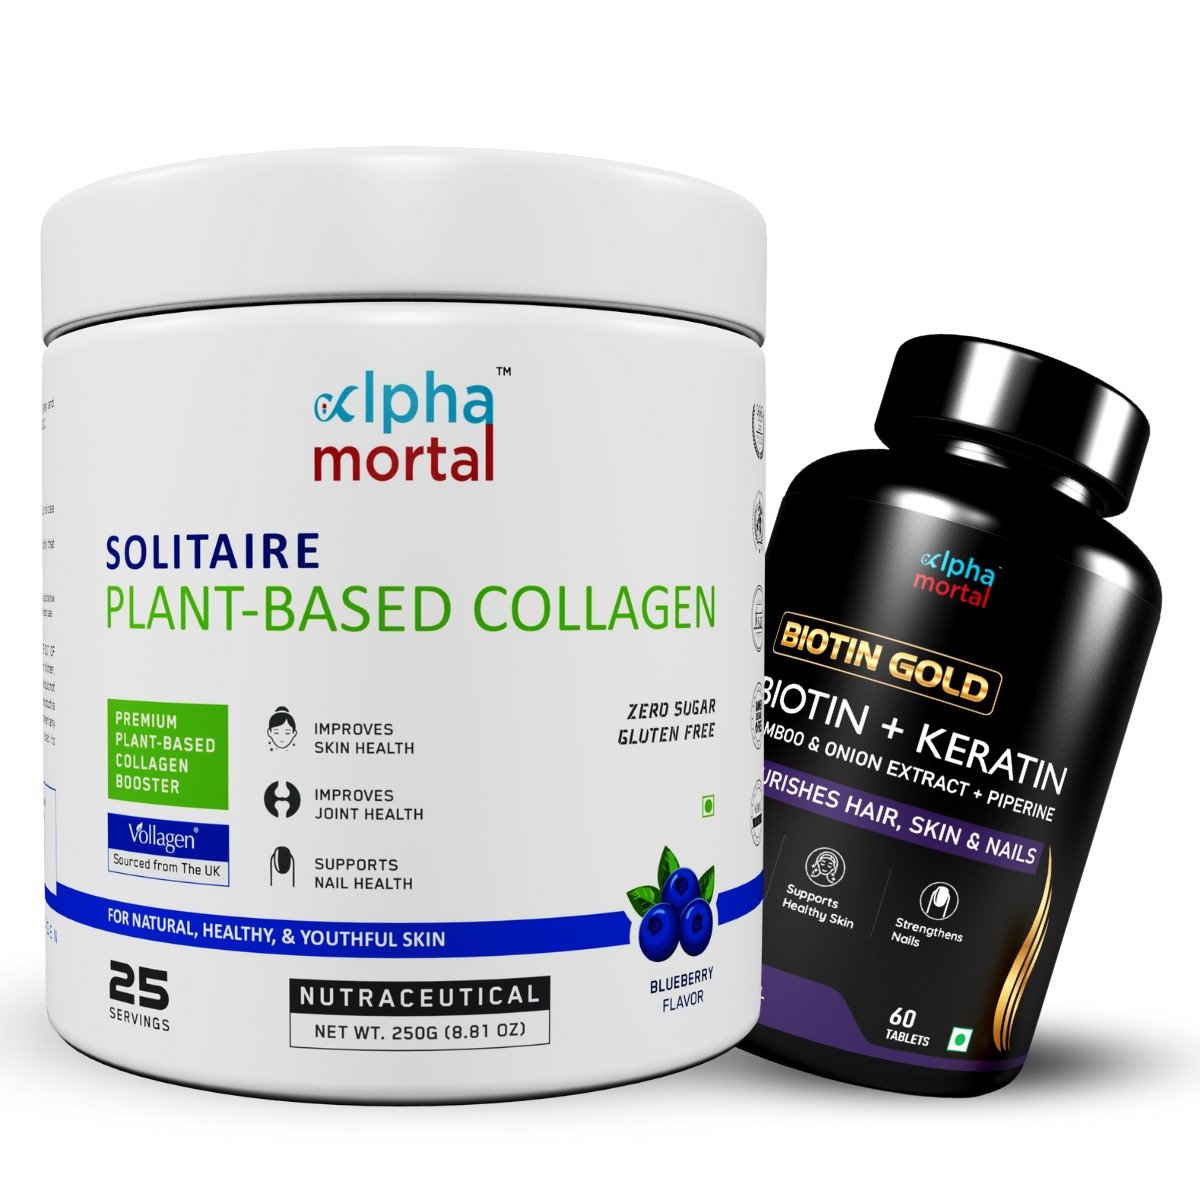 Skin & Hair care Combo (Blueberry collagen+Biotin Gold)